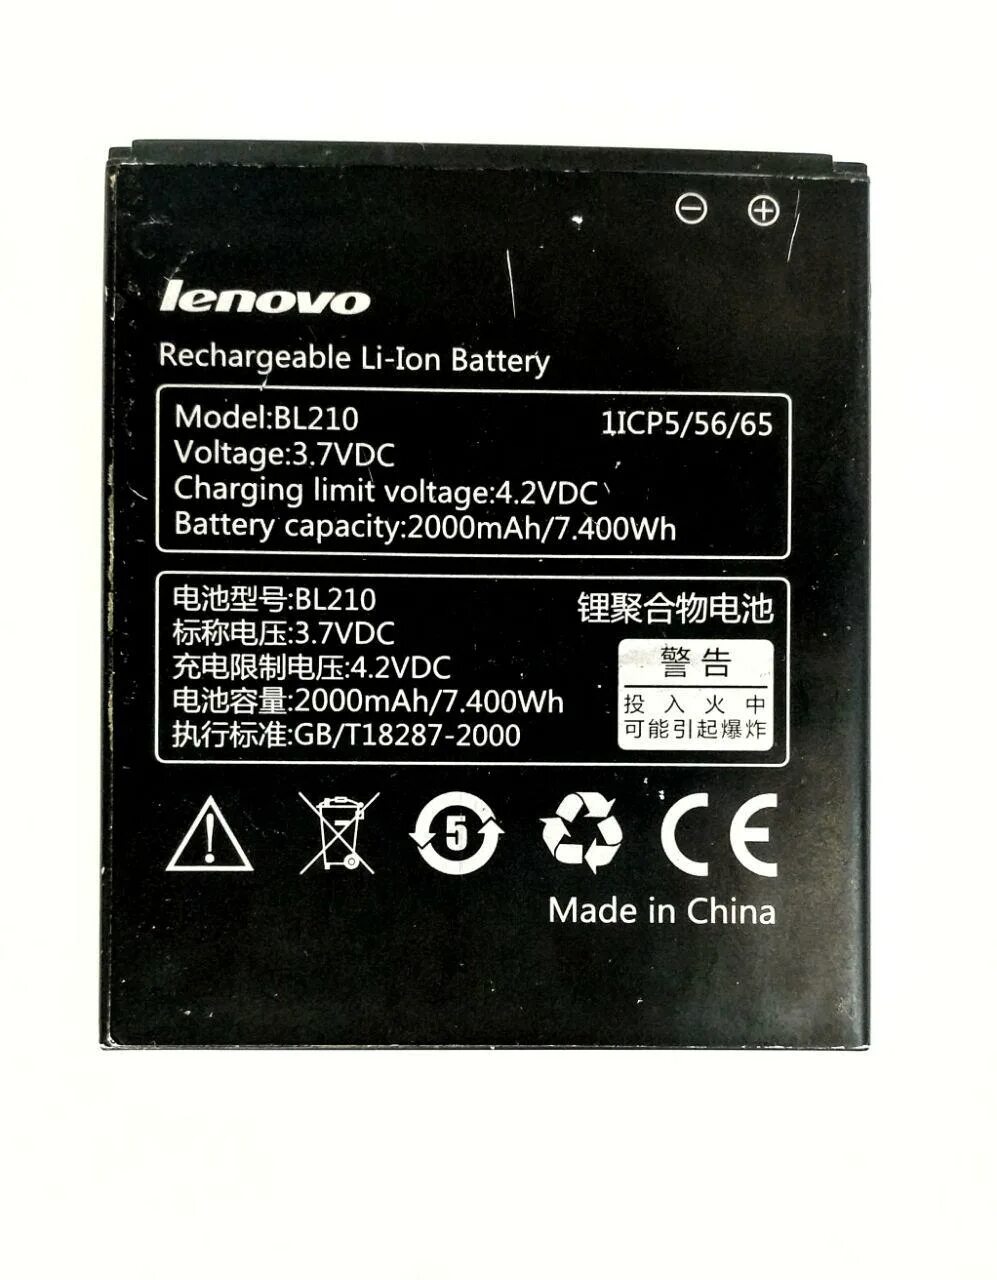 Lenovo батарея купить. Аккумулятор для Lenovo bl210. Аккумулятор bl210 для Lenovo s820. Батарейка к леново bl210. Аккумулятор леново 2013.